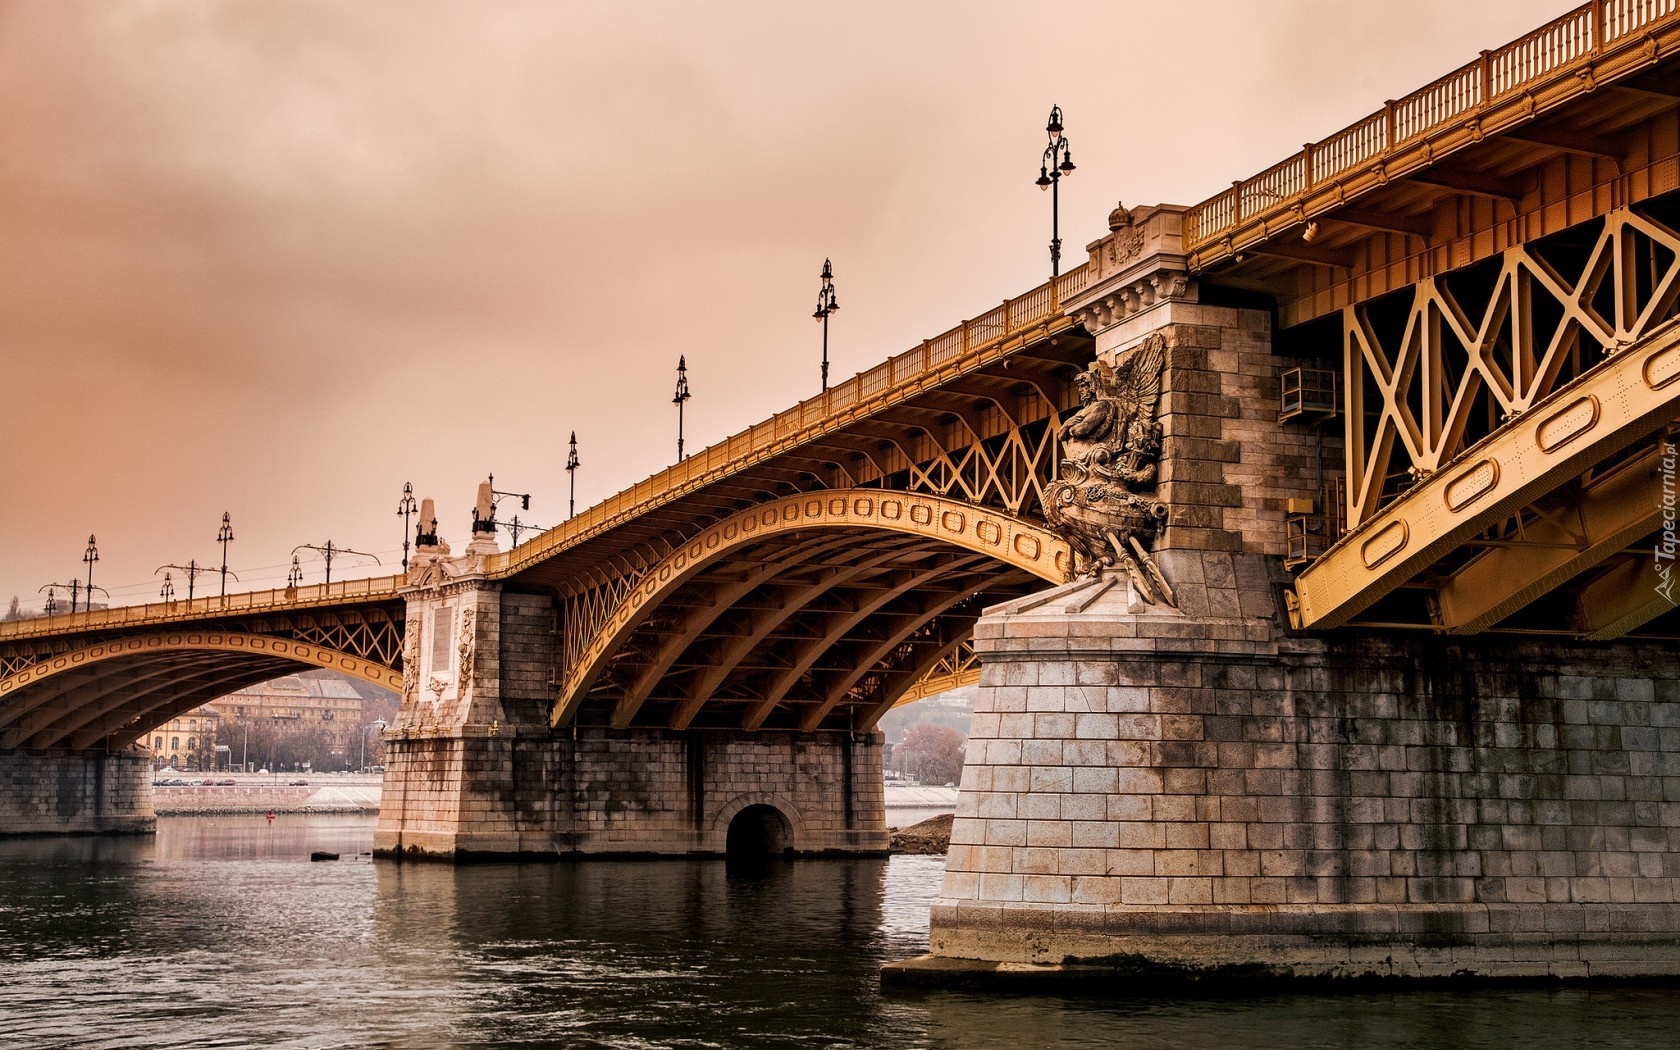 Margit Most, Rzeka, Dunaj, Budapeszt, Węgry